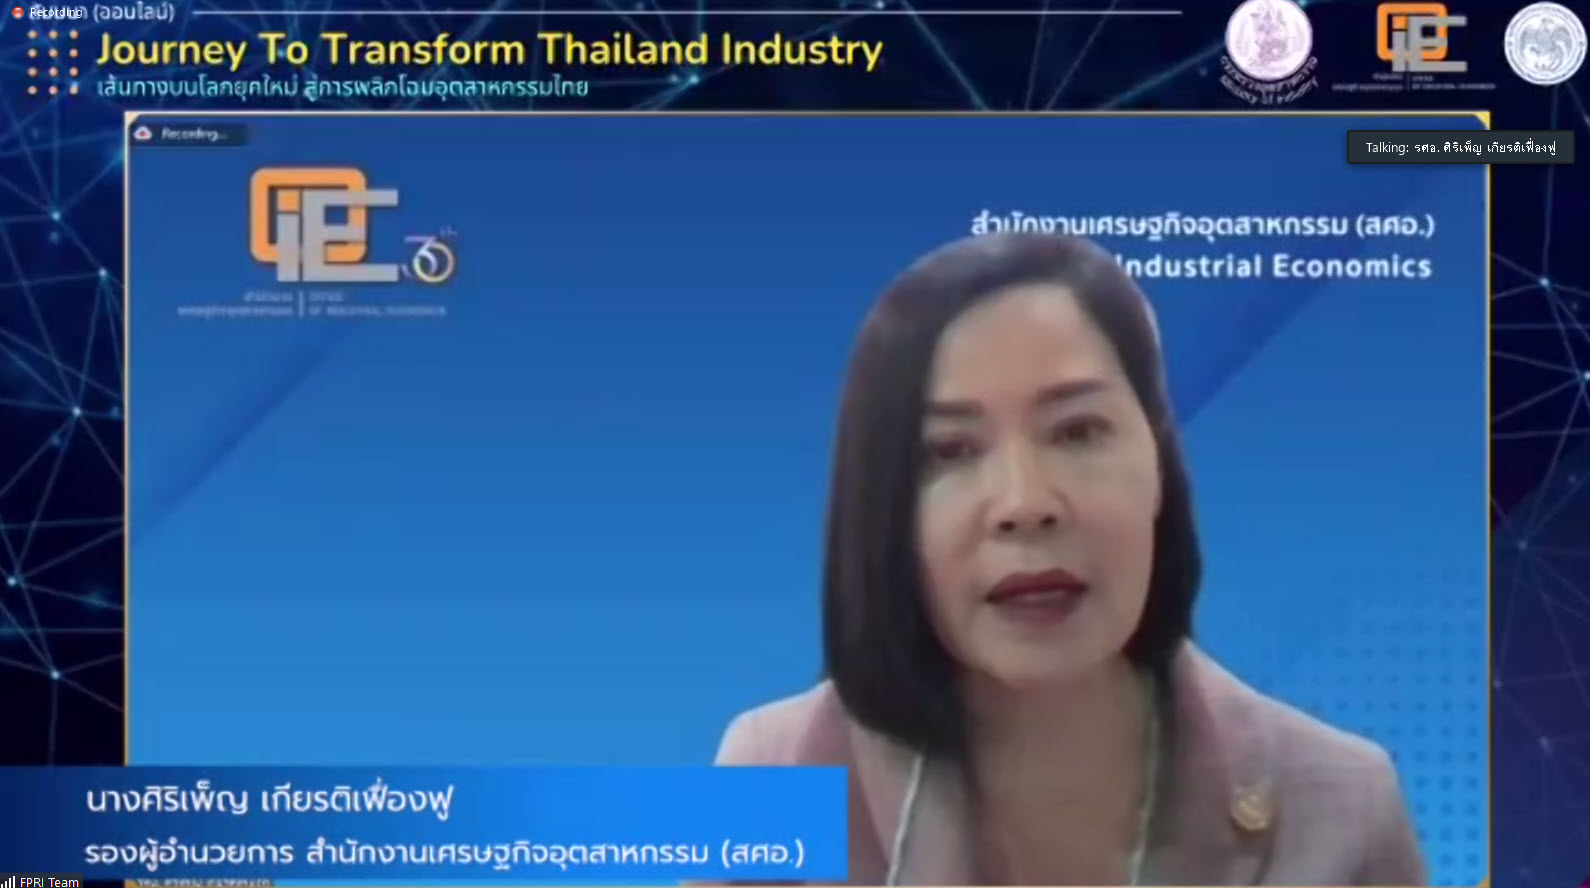 Journey to Transform Thailand Industry Seminar 